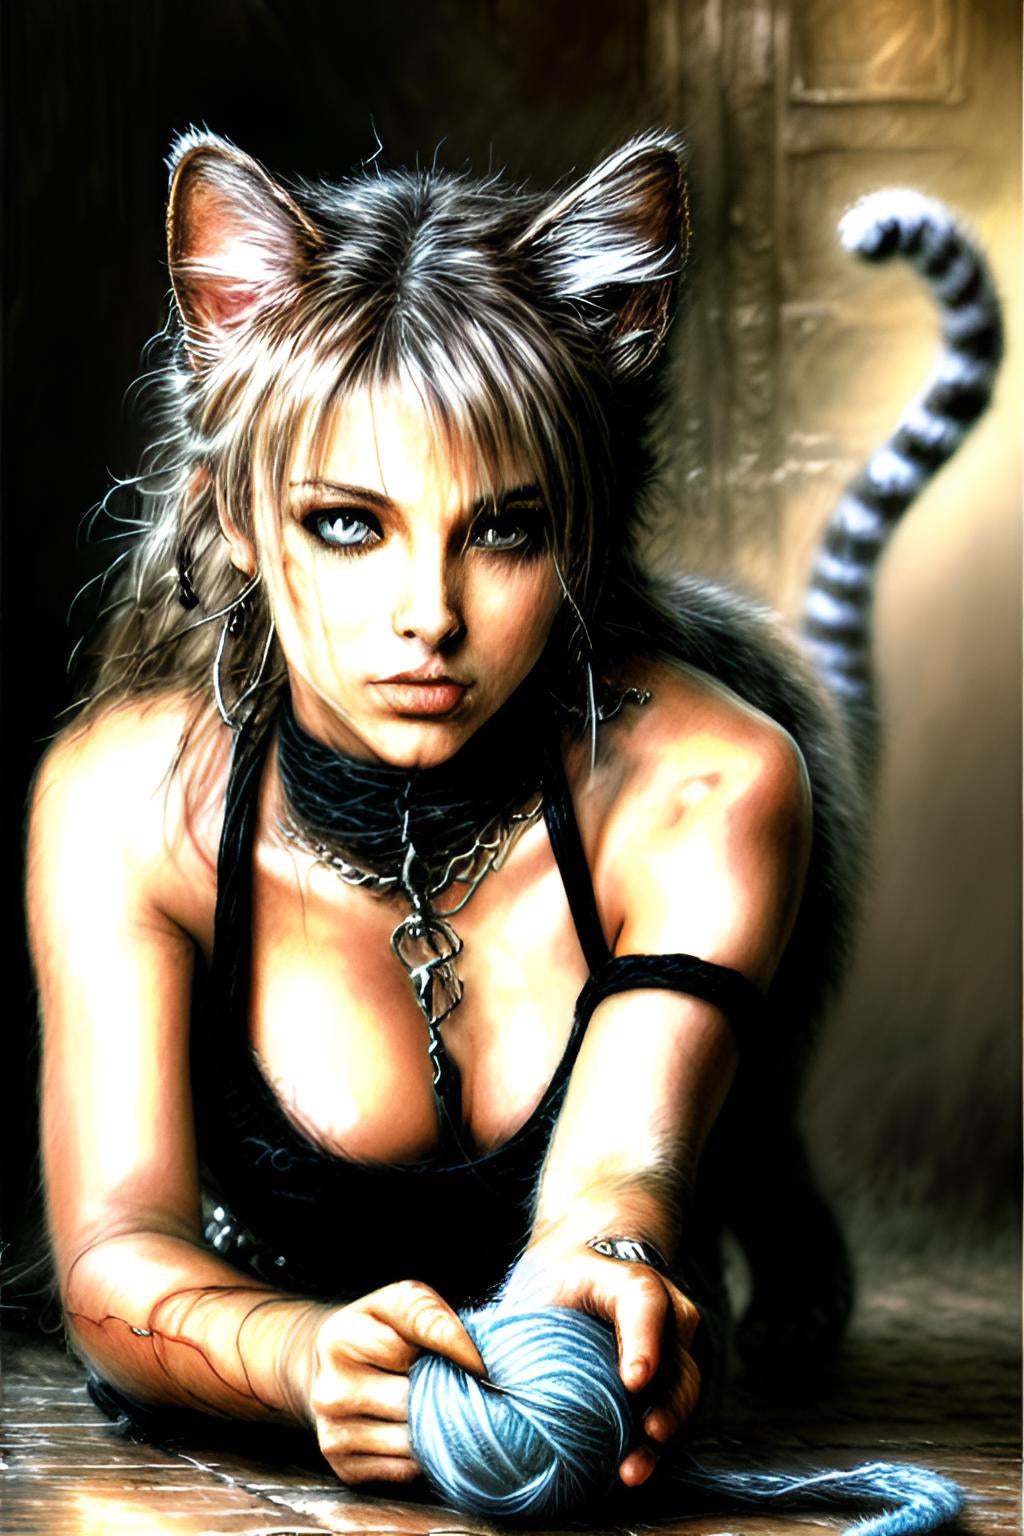 Niko catwoman tail cat eyes